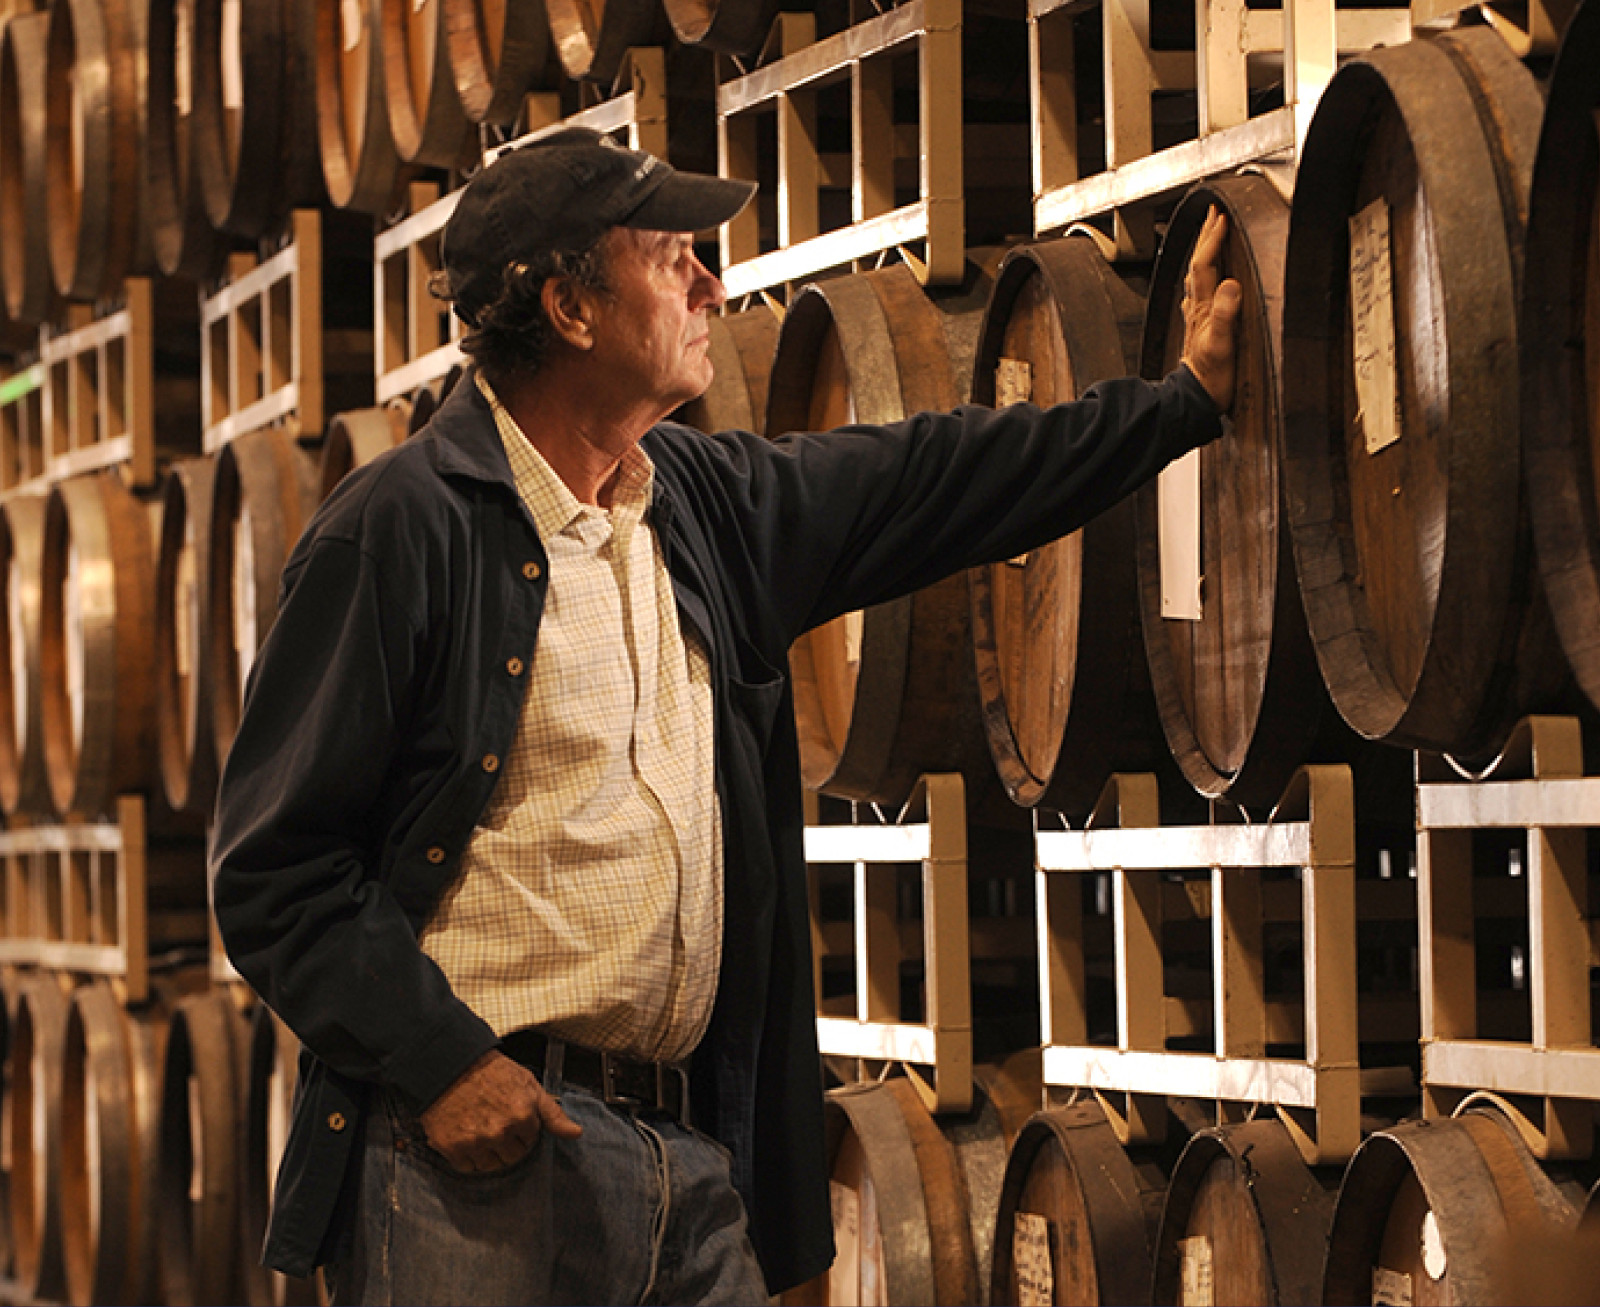 Andrew Quady with Wine Barrels